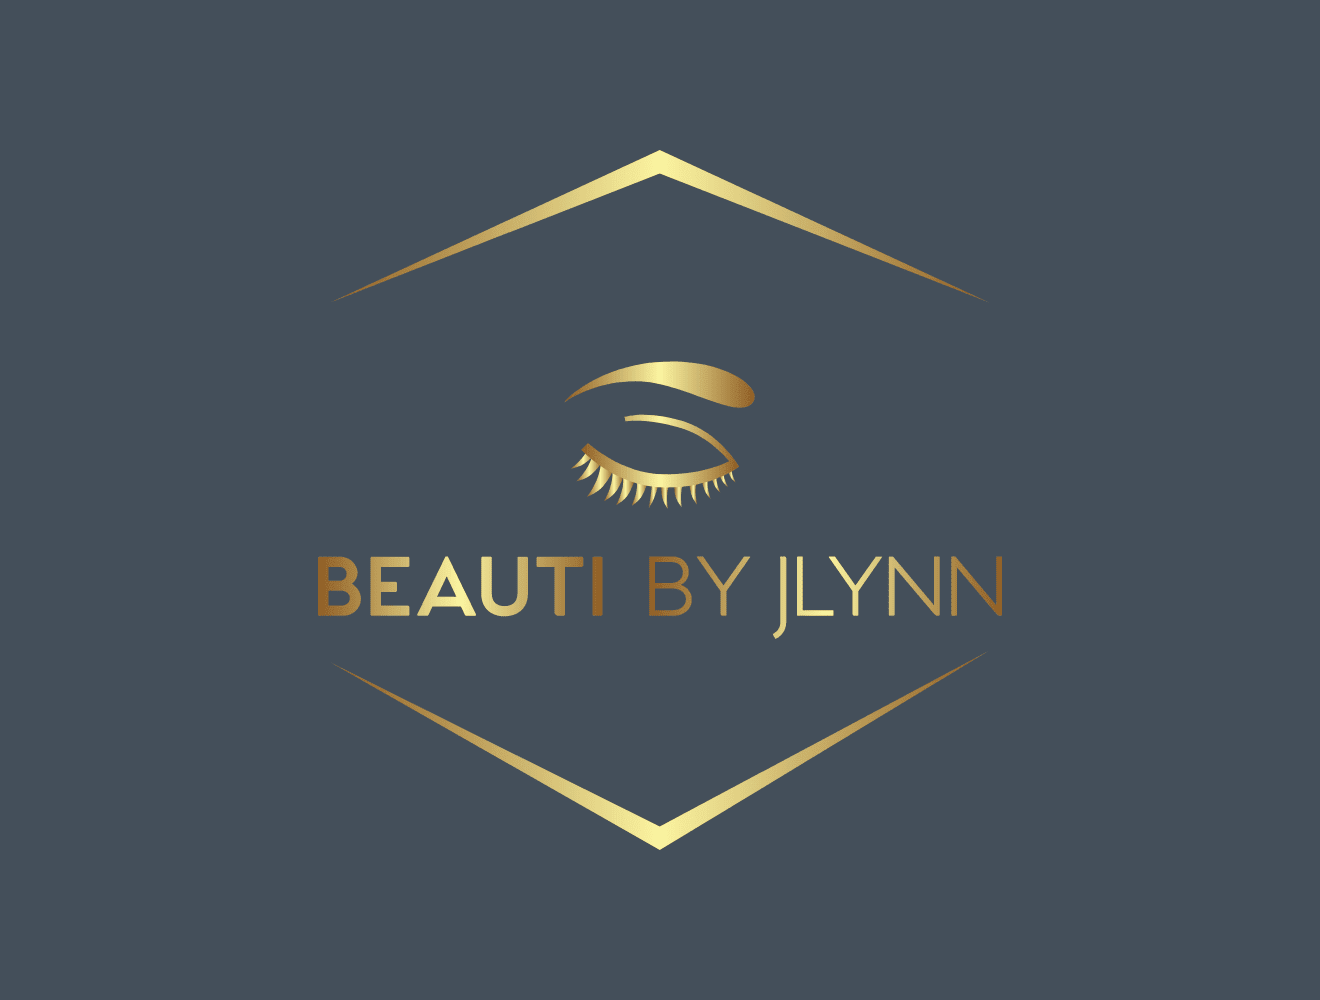 Beauti By Jlynn